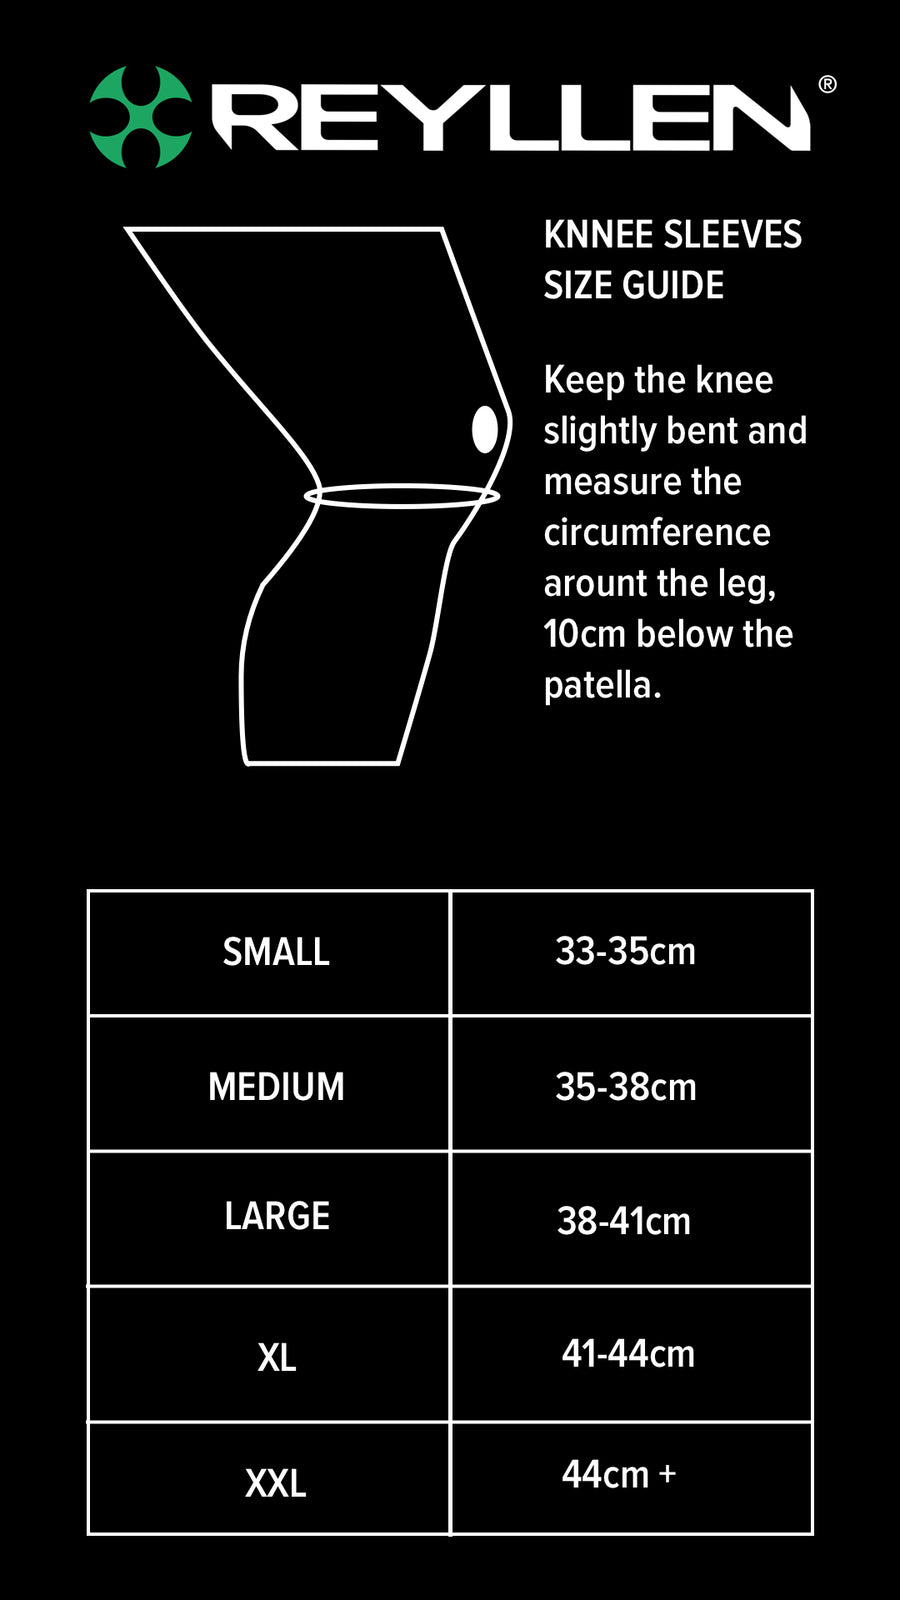 Reyllen Venta X2 5mm Knee Sleeves Neoprene black support size guide